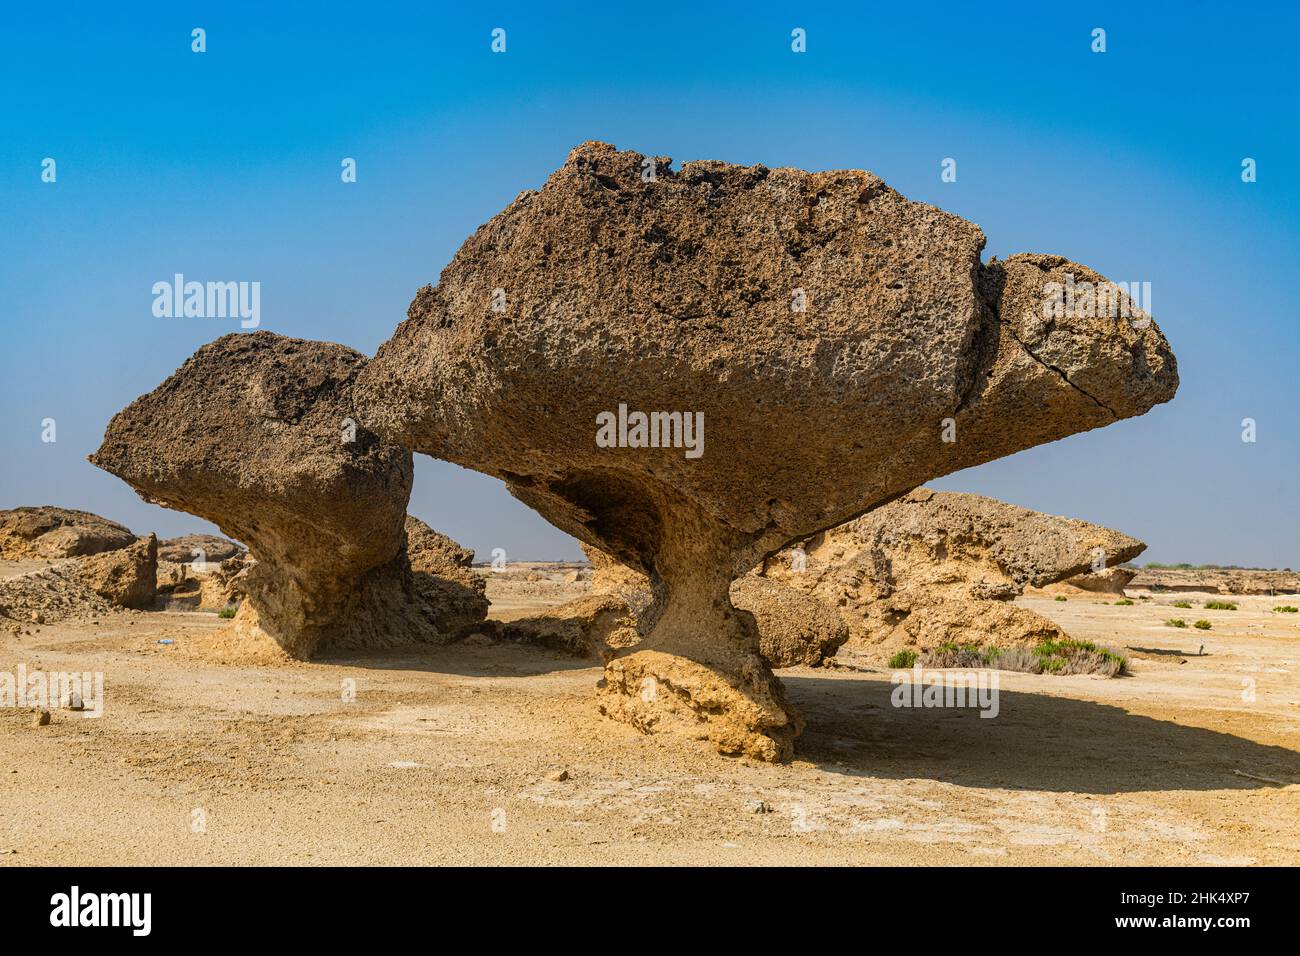 Mushroom rocks, Farasan islands, Kingdom of Saudi Arabia, Middle East Stock Photo